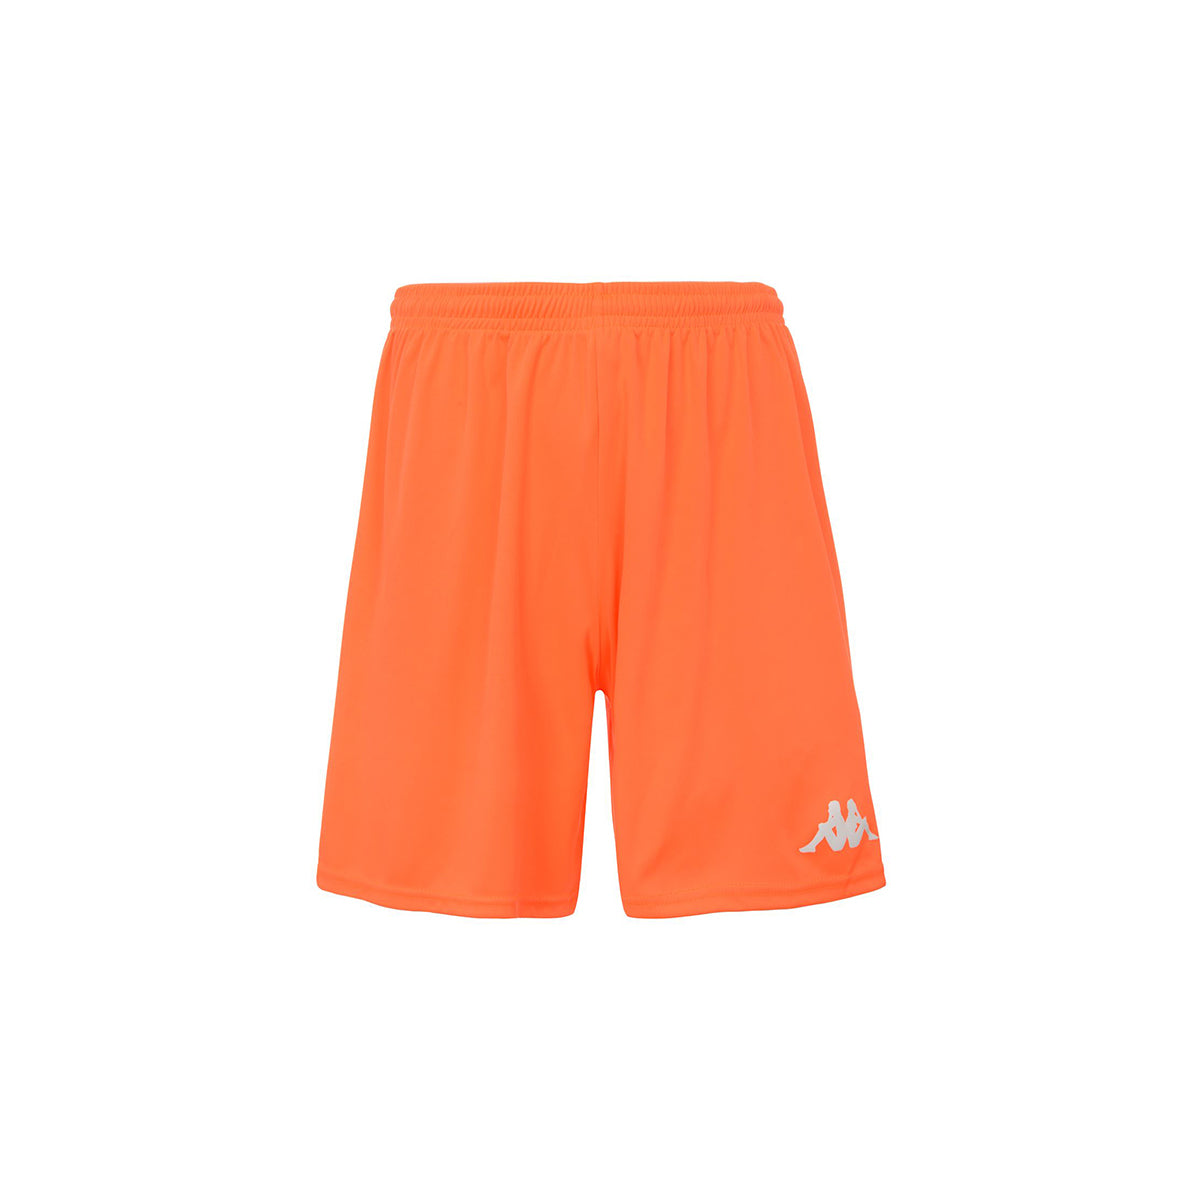 Pantalones cortes Borgo Naranja Hombre - imagen 1